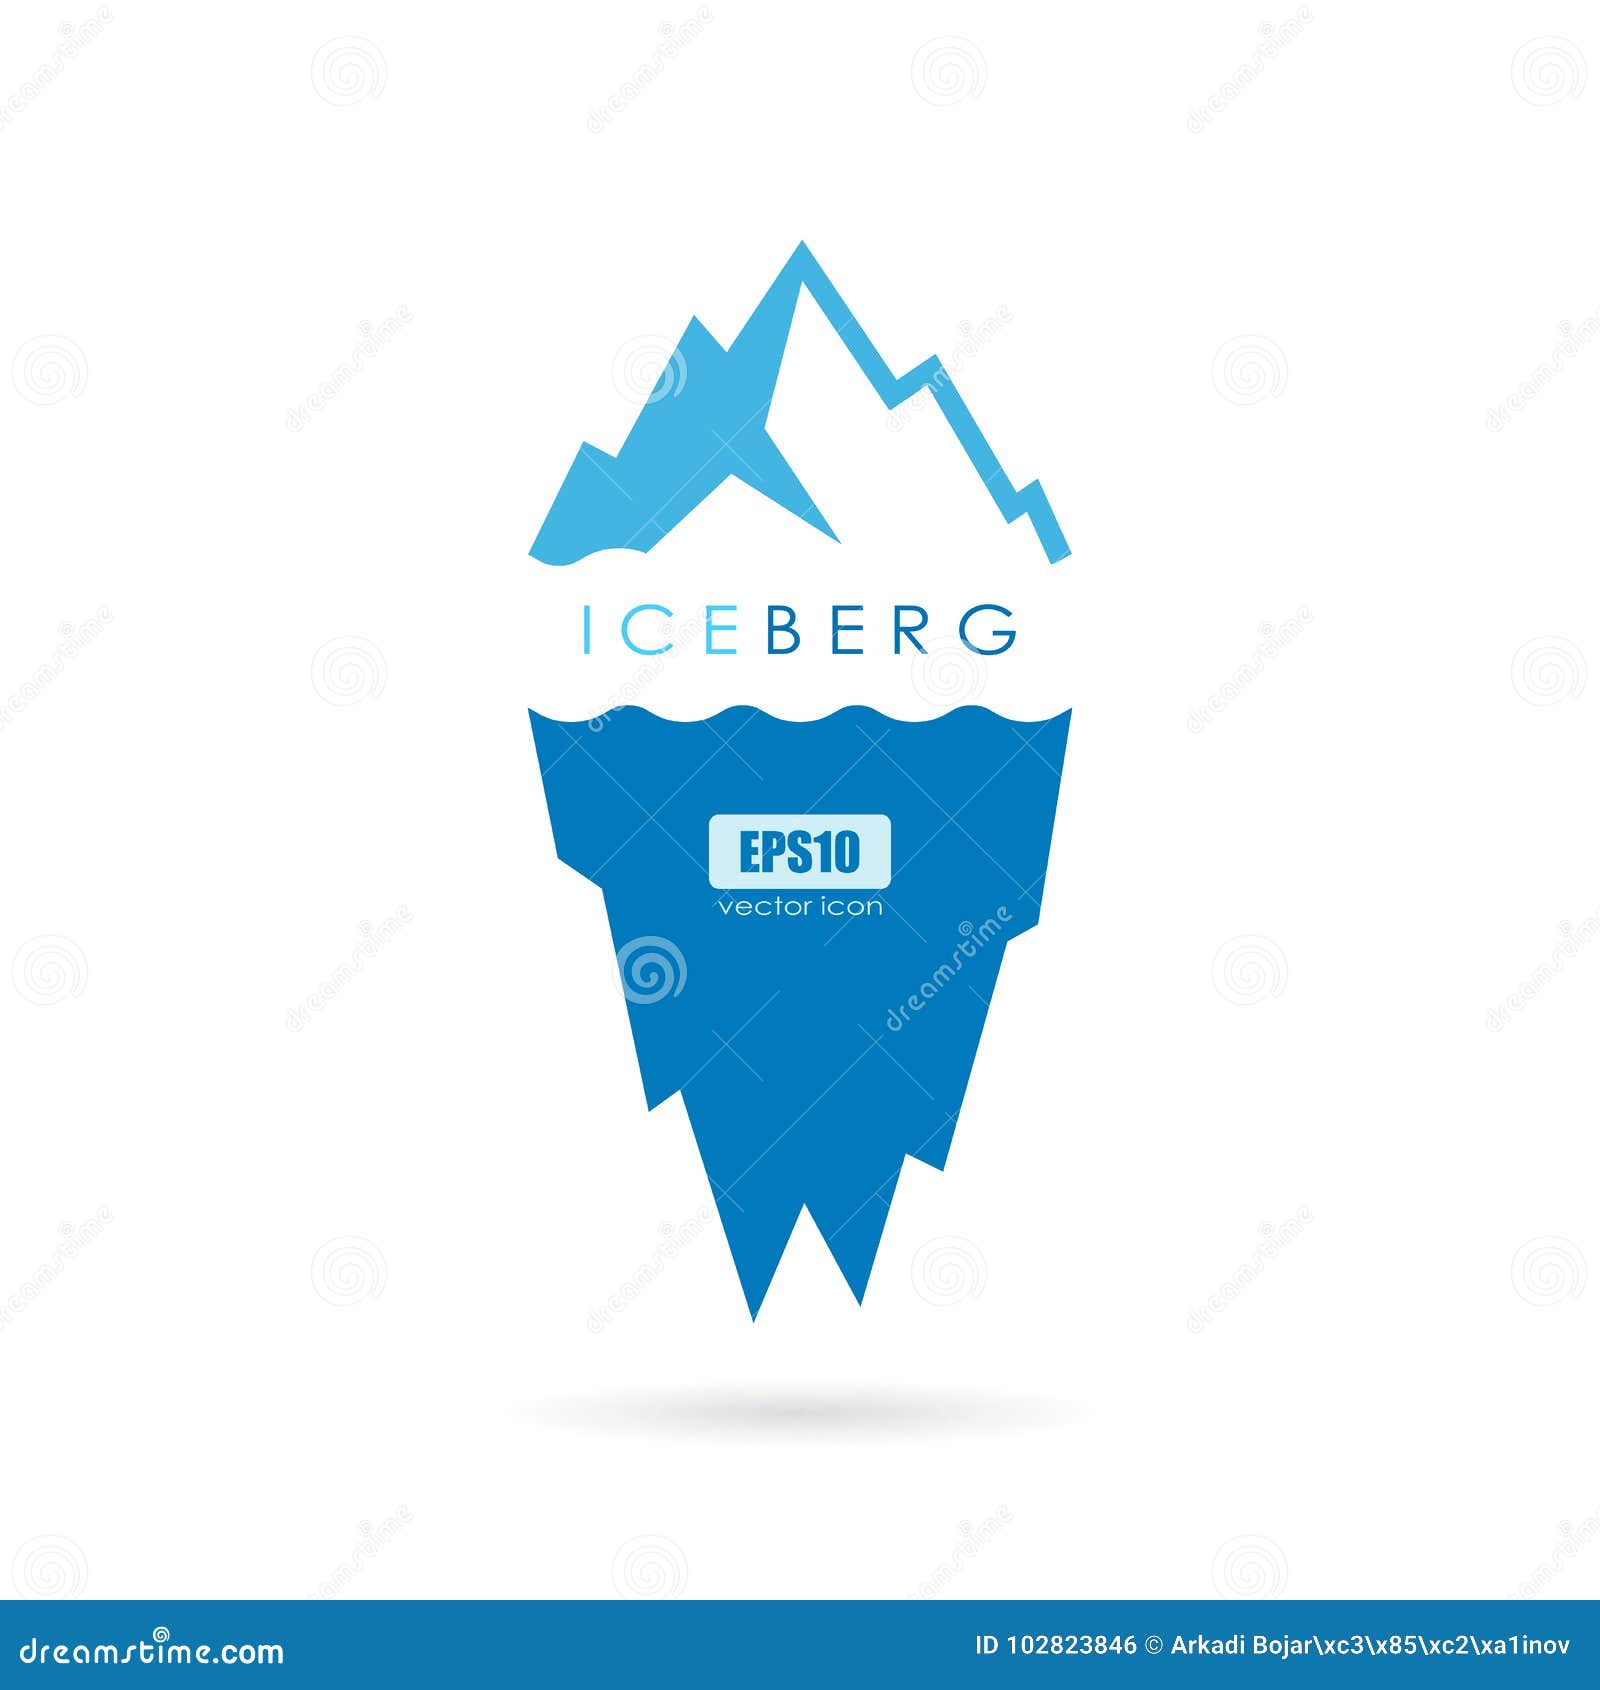 ice berg  logo